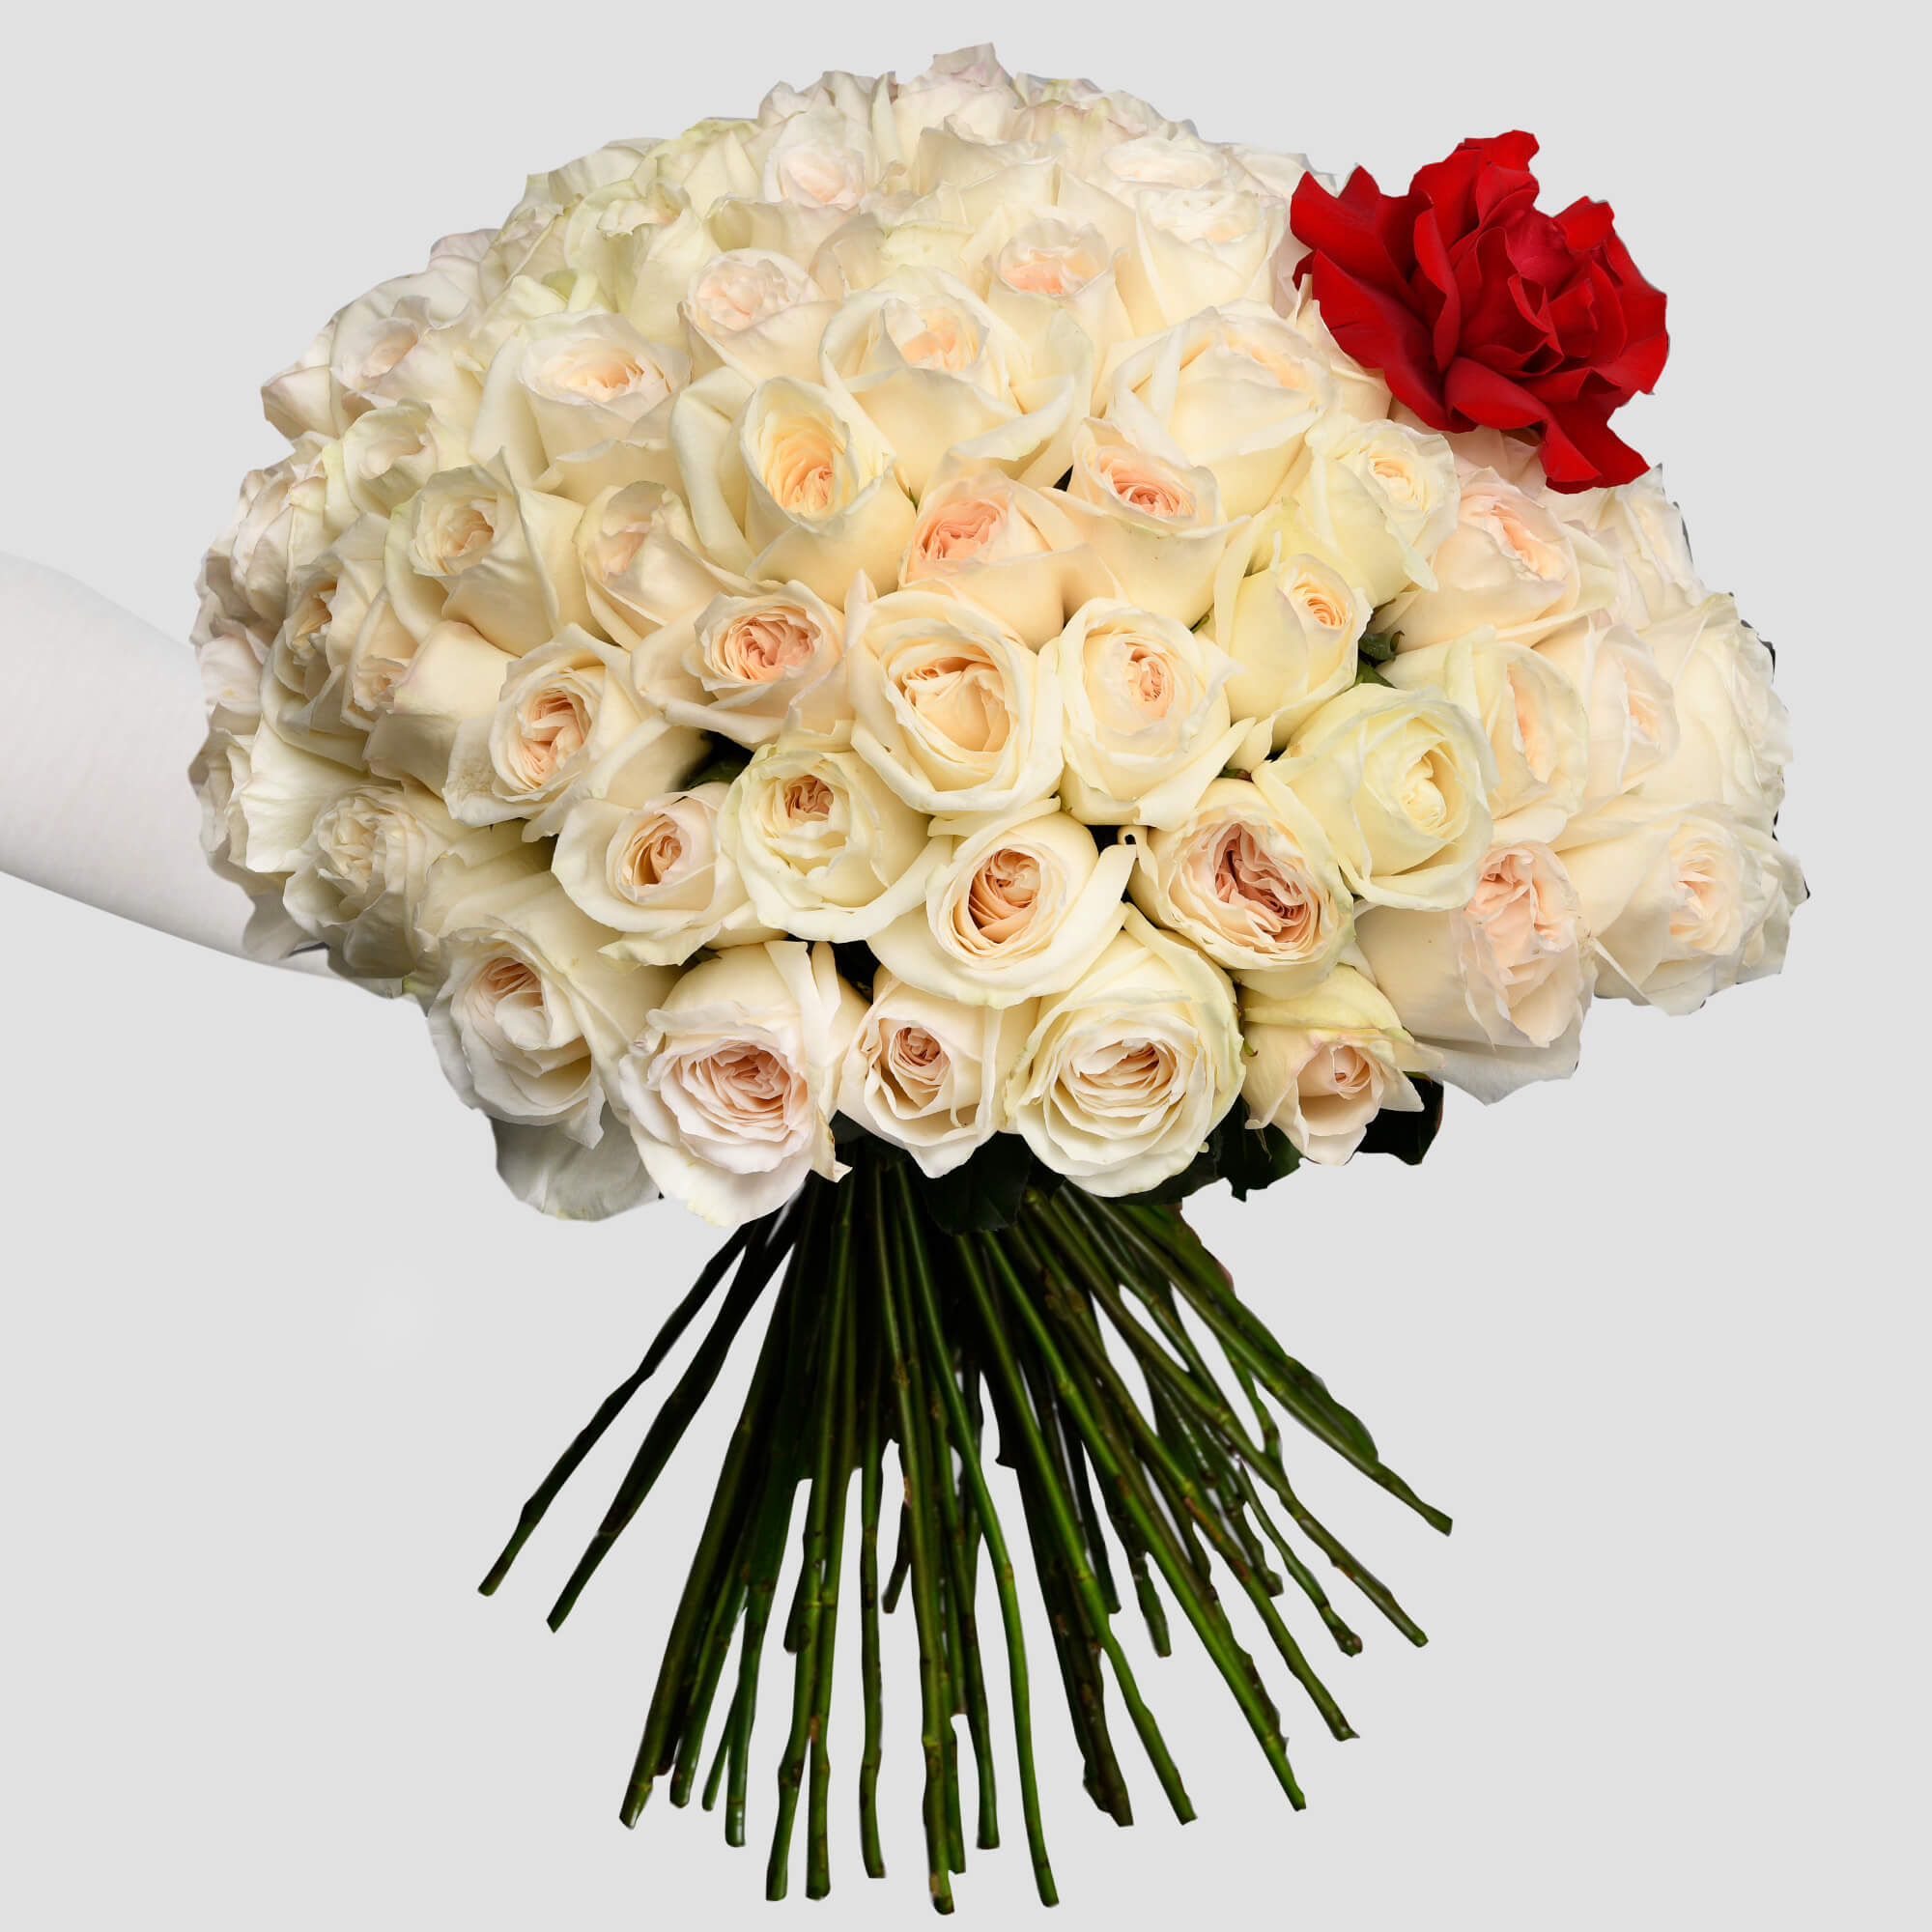 Buchet cu 100 trandafiri albi si un trandafir special rosu